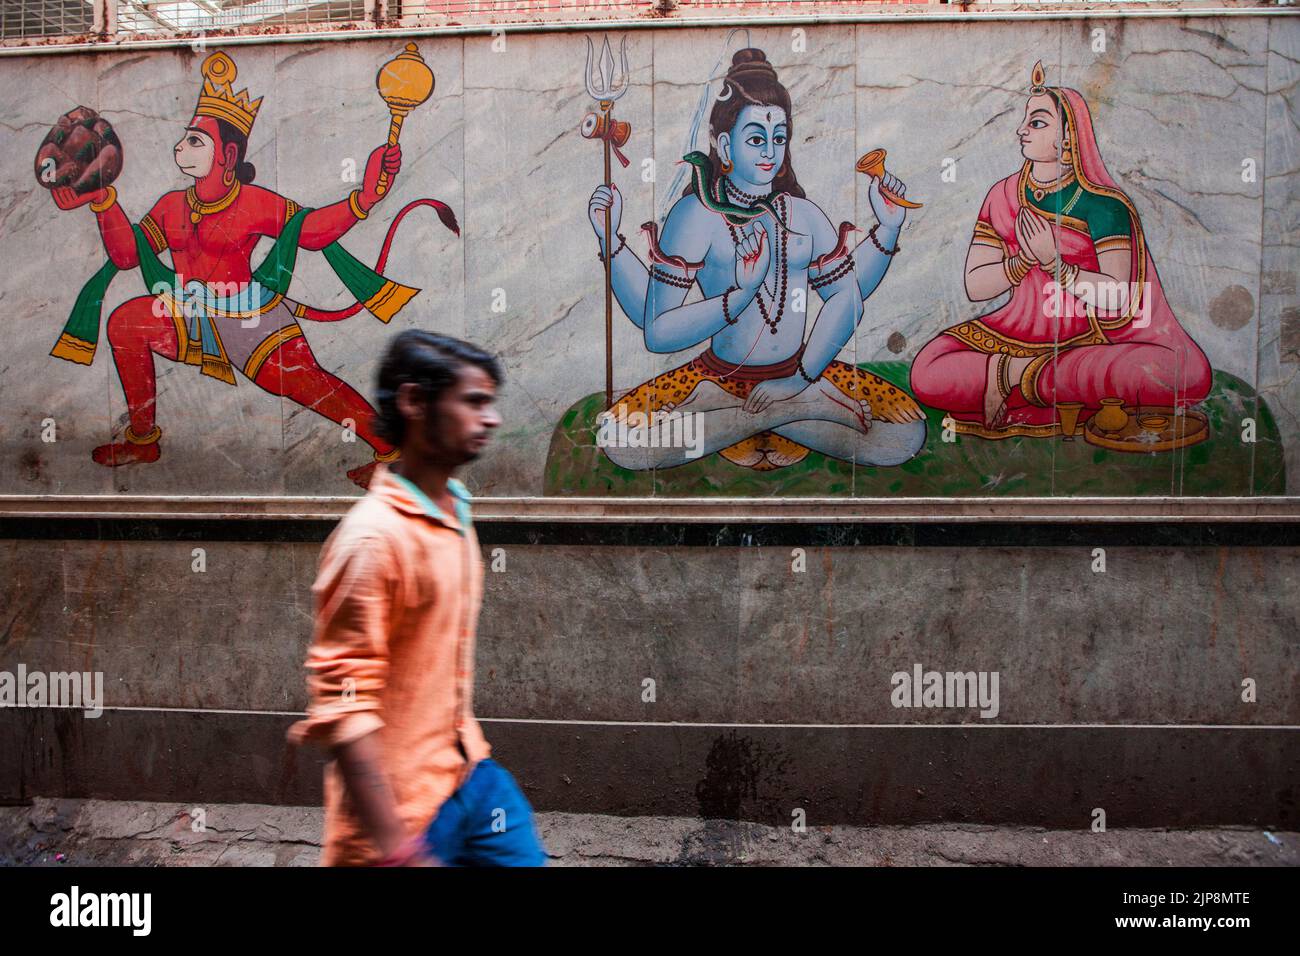 Peinture murale des dieux hindous Shiva et Hanuman, Varanasi, Banaras, Benaras, Kashi, Uttar Pradesh, Inde Banque D'Images